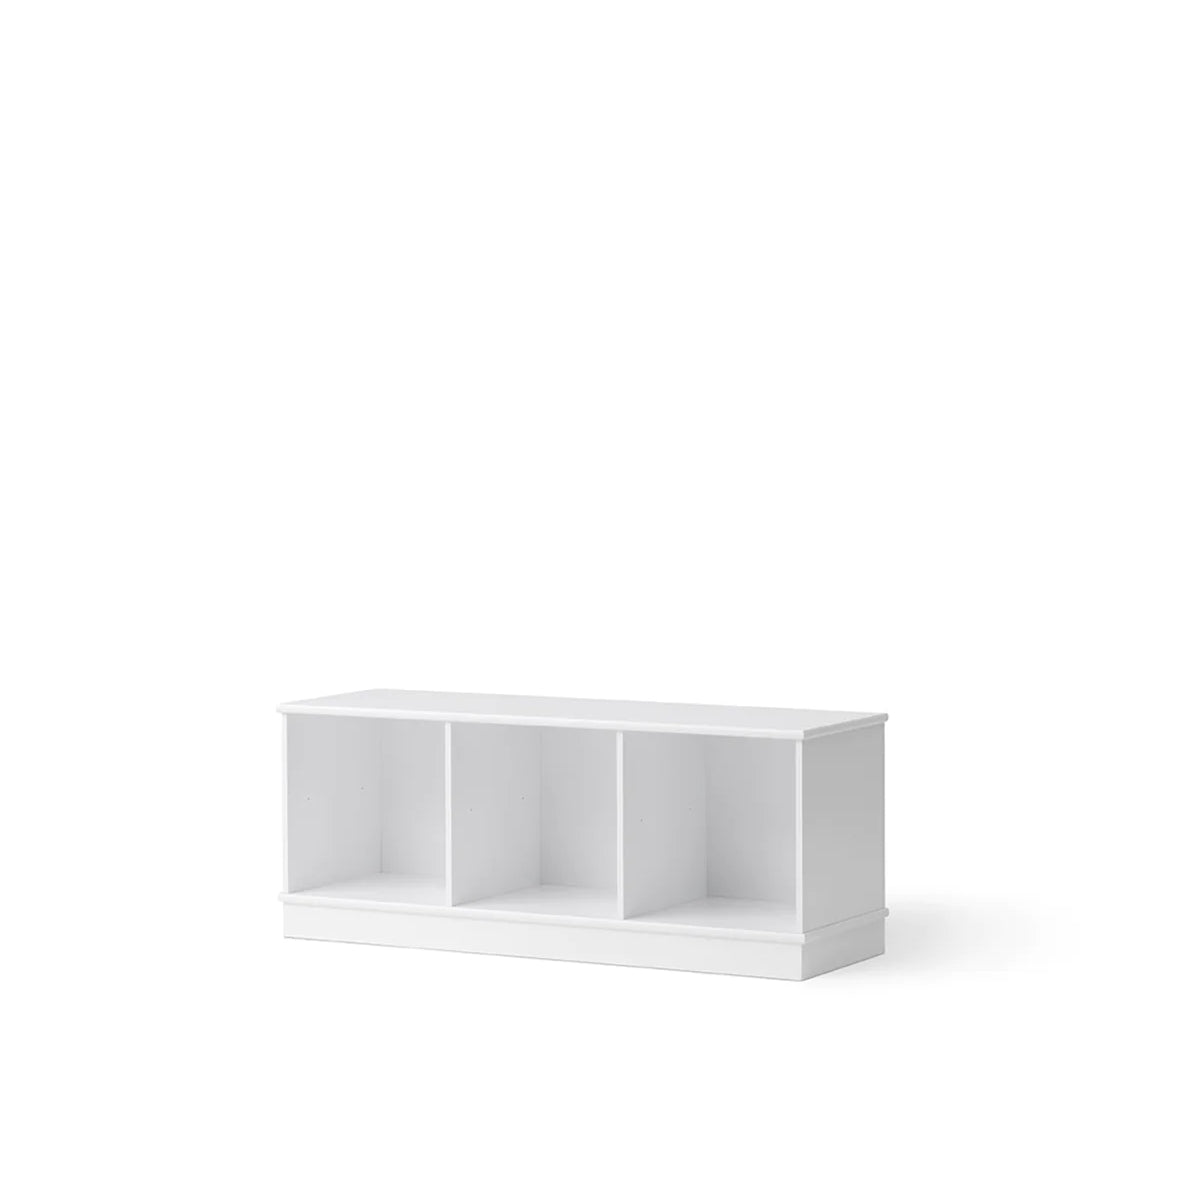 Oliver Furniture Standregal horizontal 3x1m m. Sockel